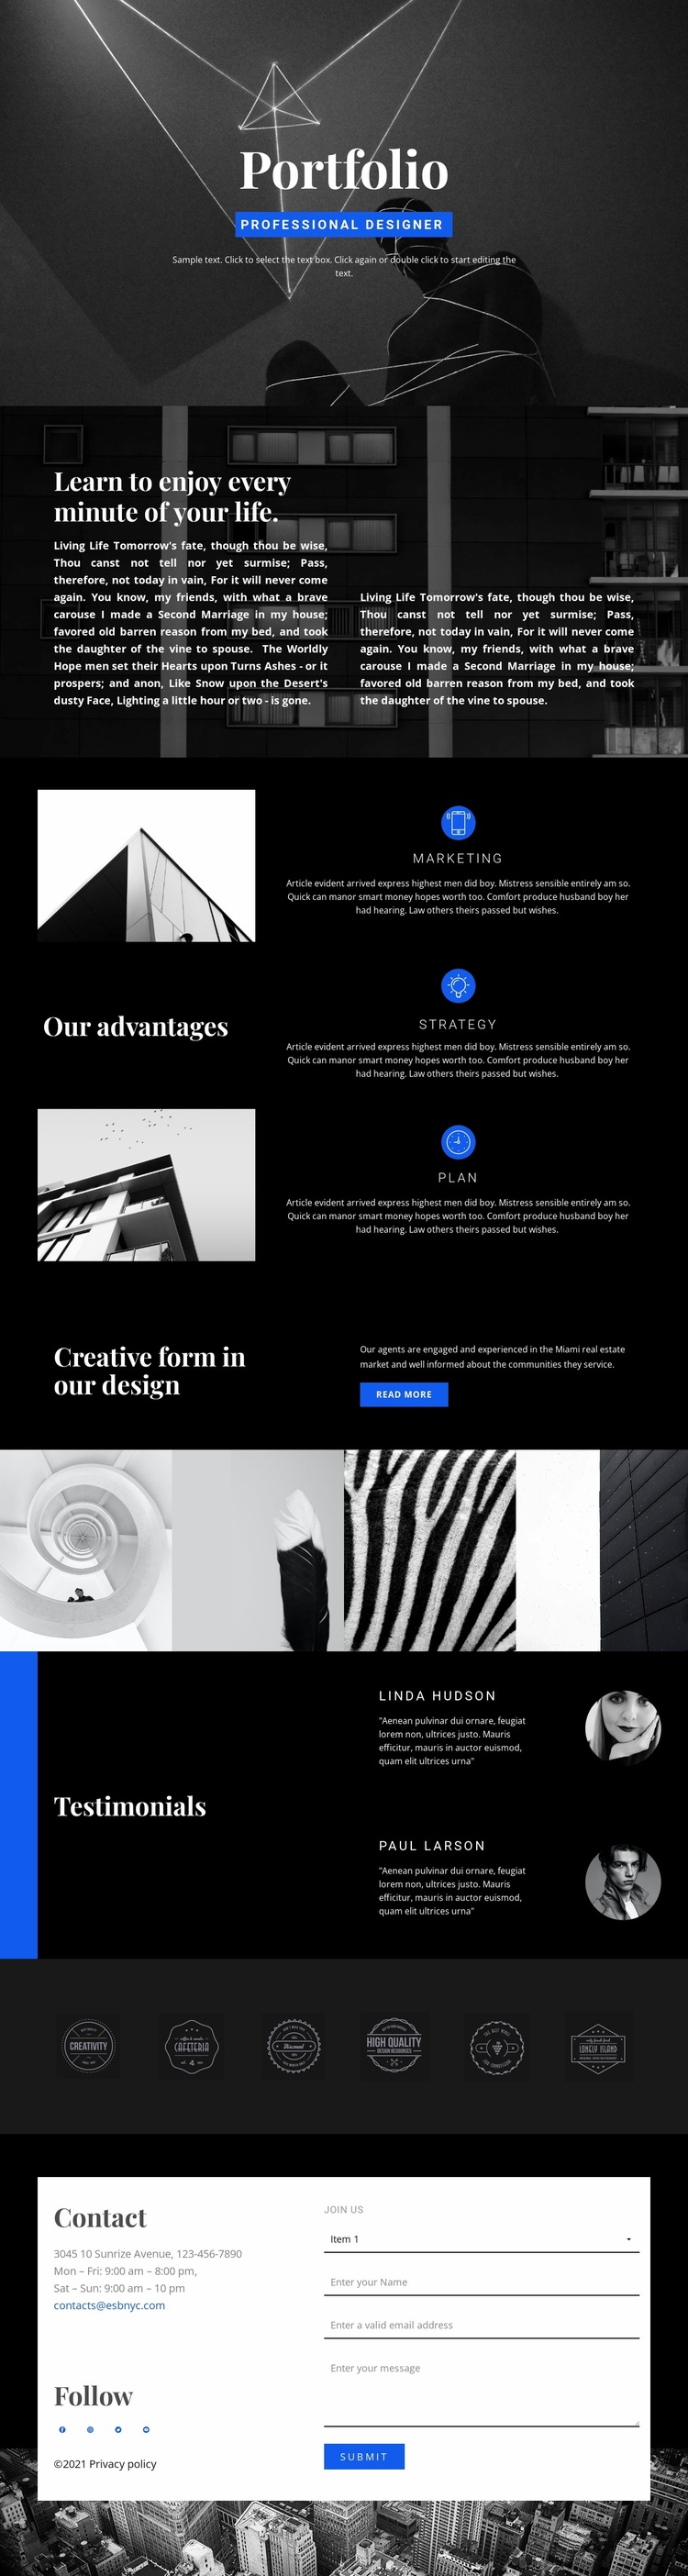 Fashion Designer Portfolio Website Design